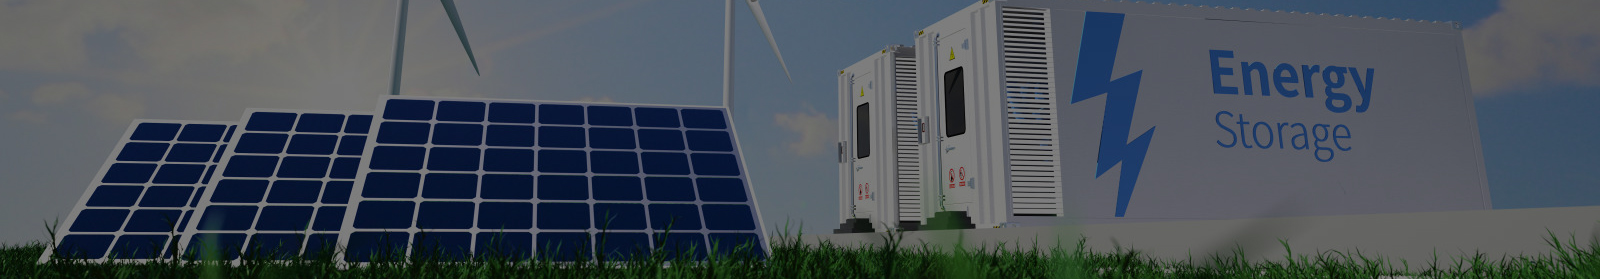 Photovoltaic & Energy Storage